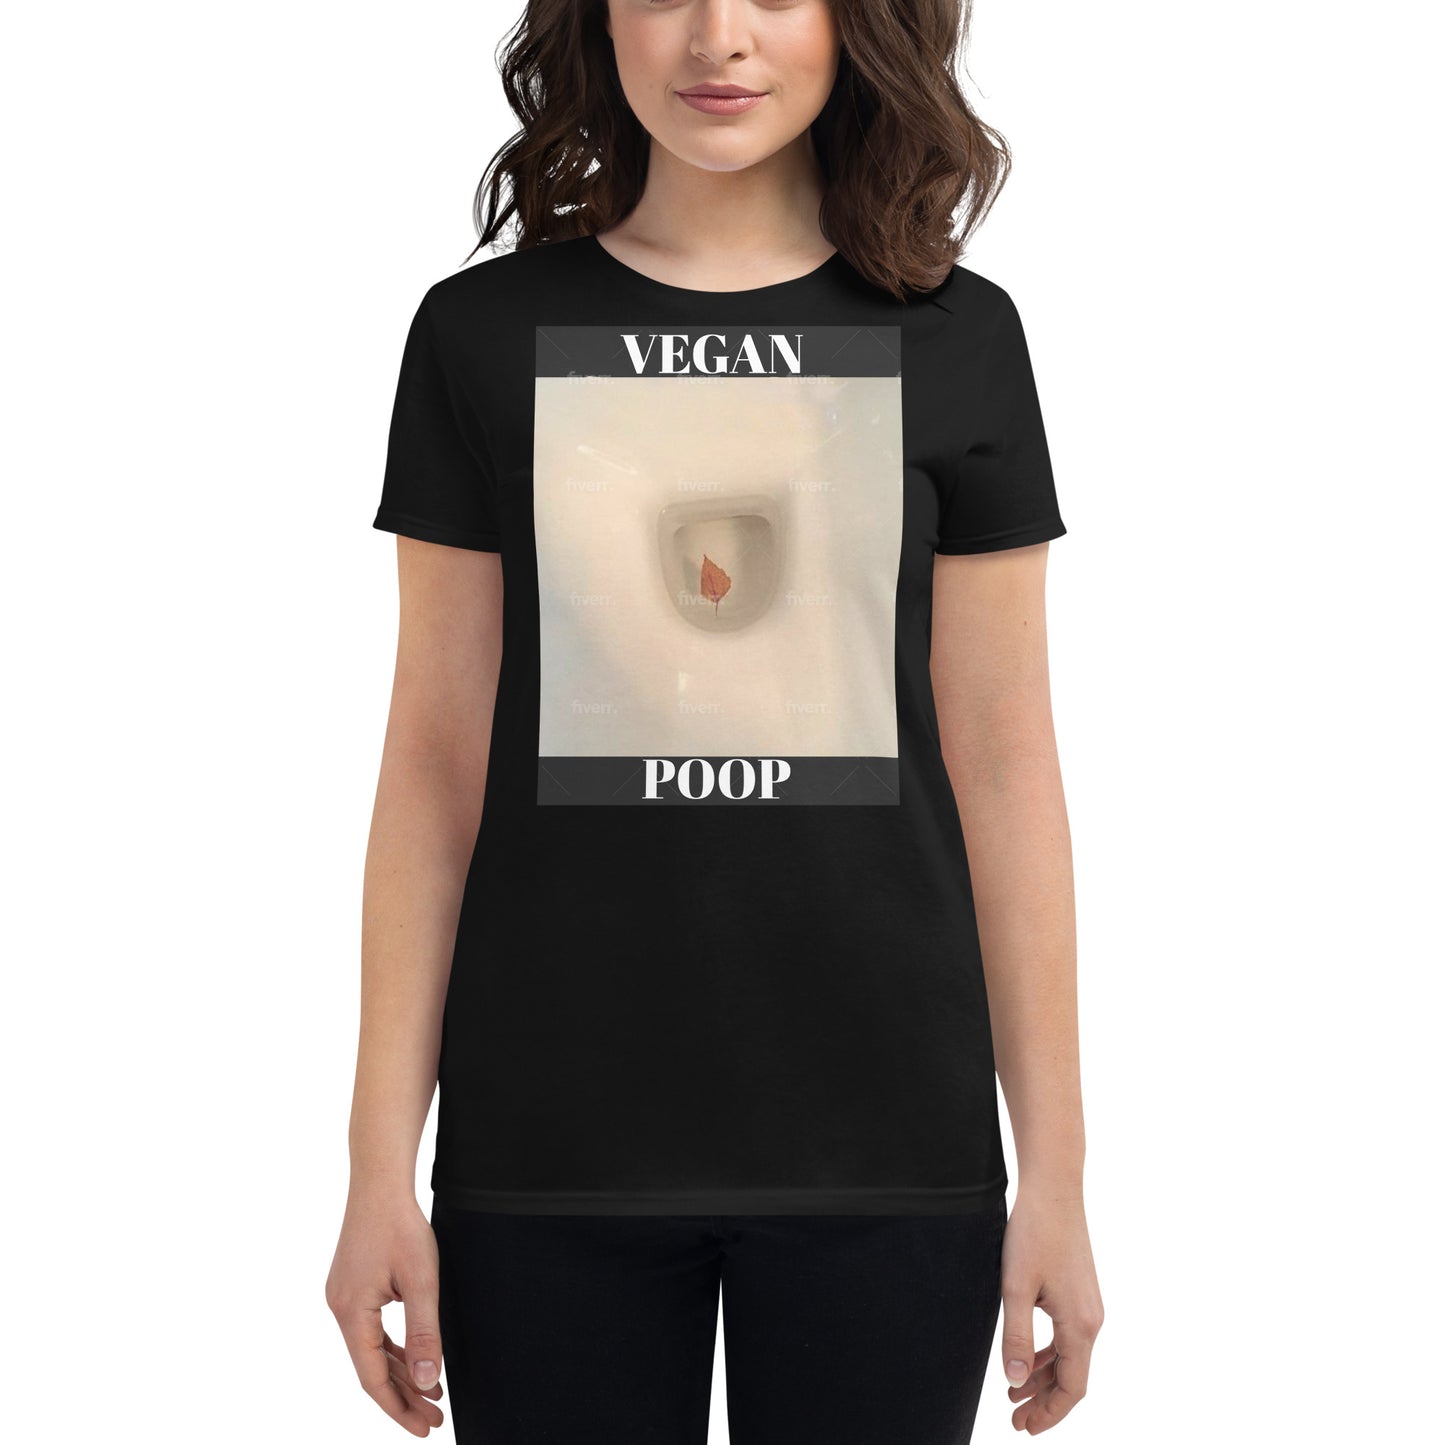 Vegan poop